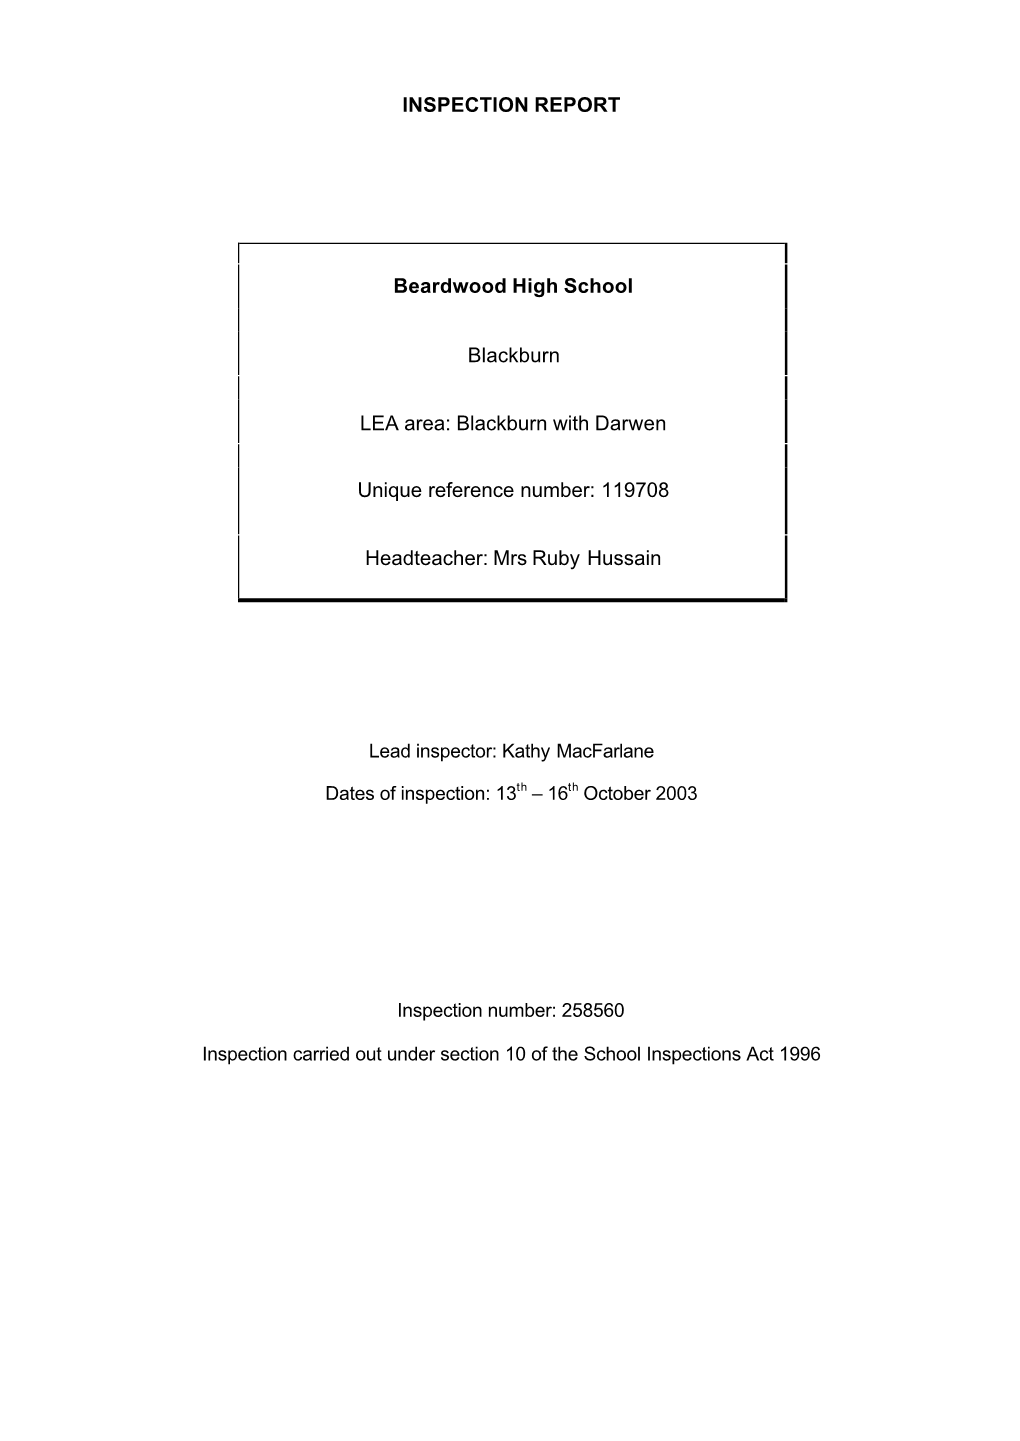 INSPECTION REPORT Beardwood High School Blackburn LEA Area: Blackburn with Darwen Unique Reference Number: 119708 Headteacher: M